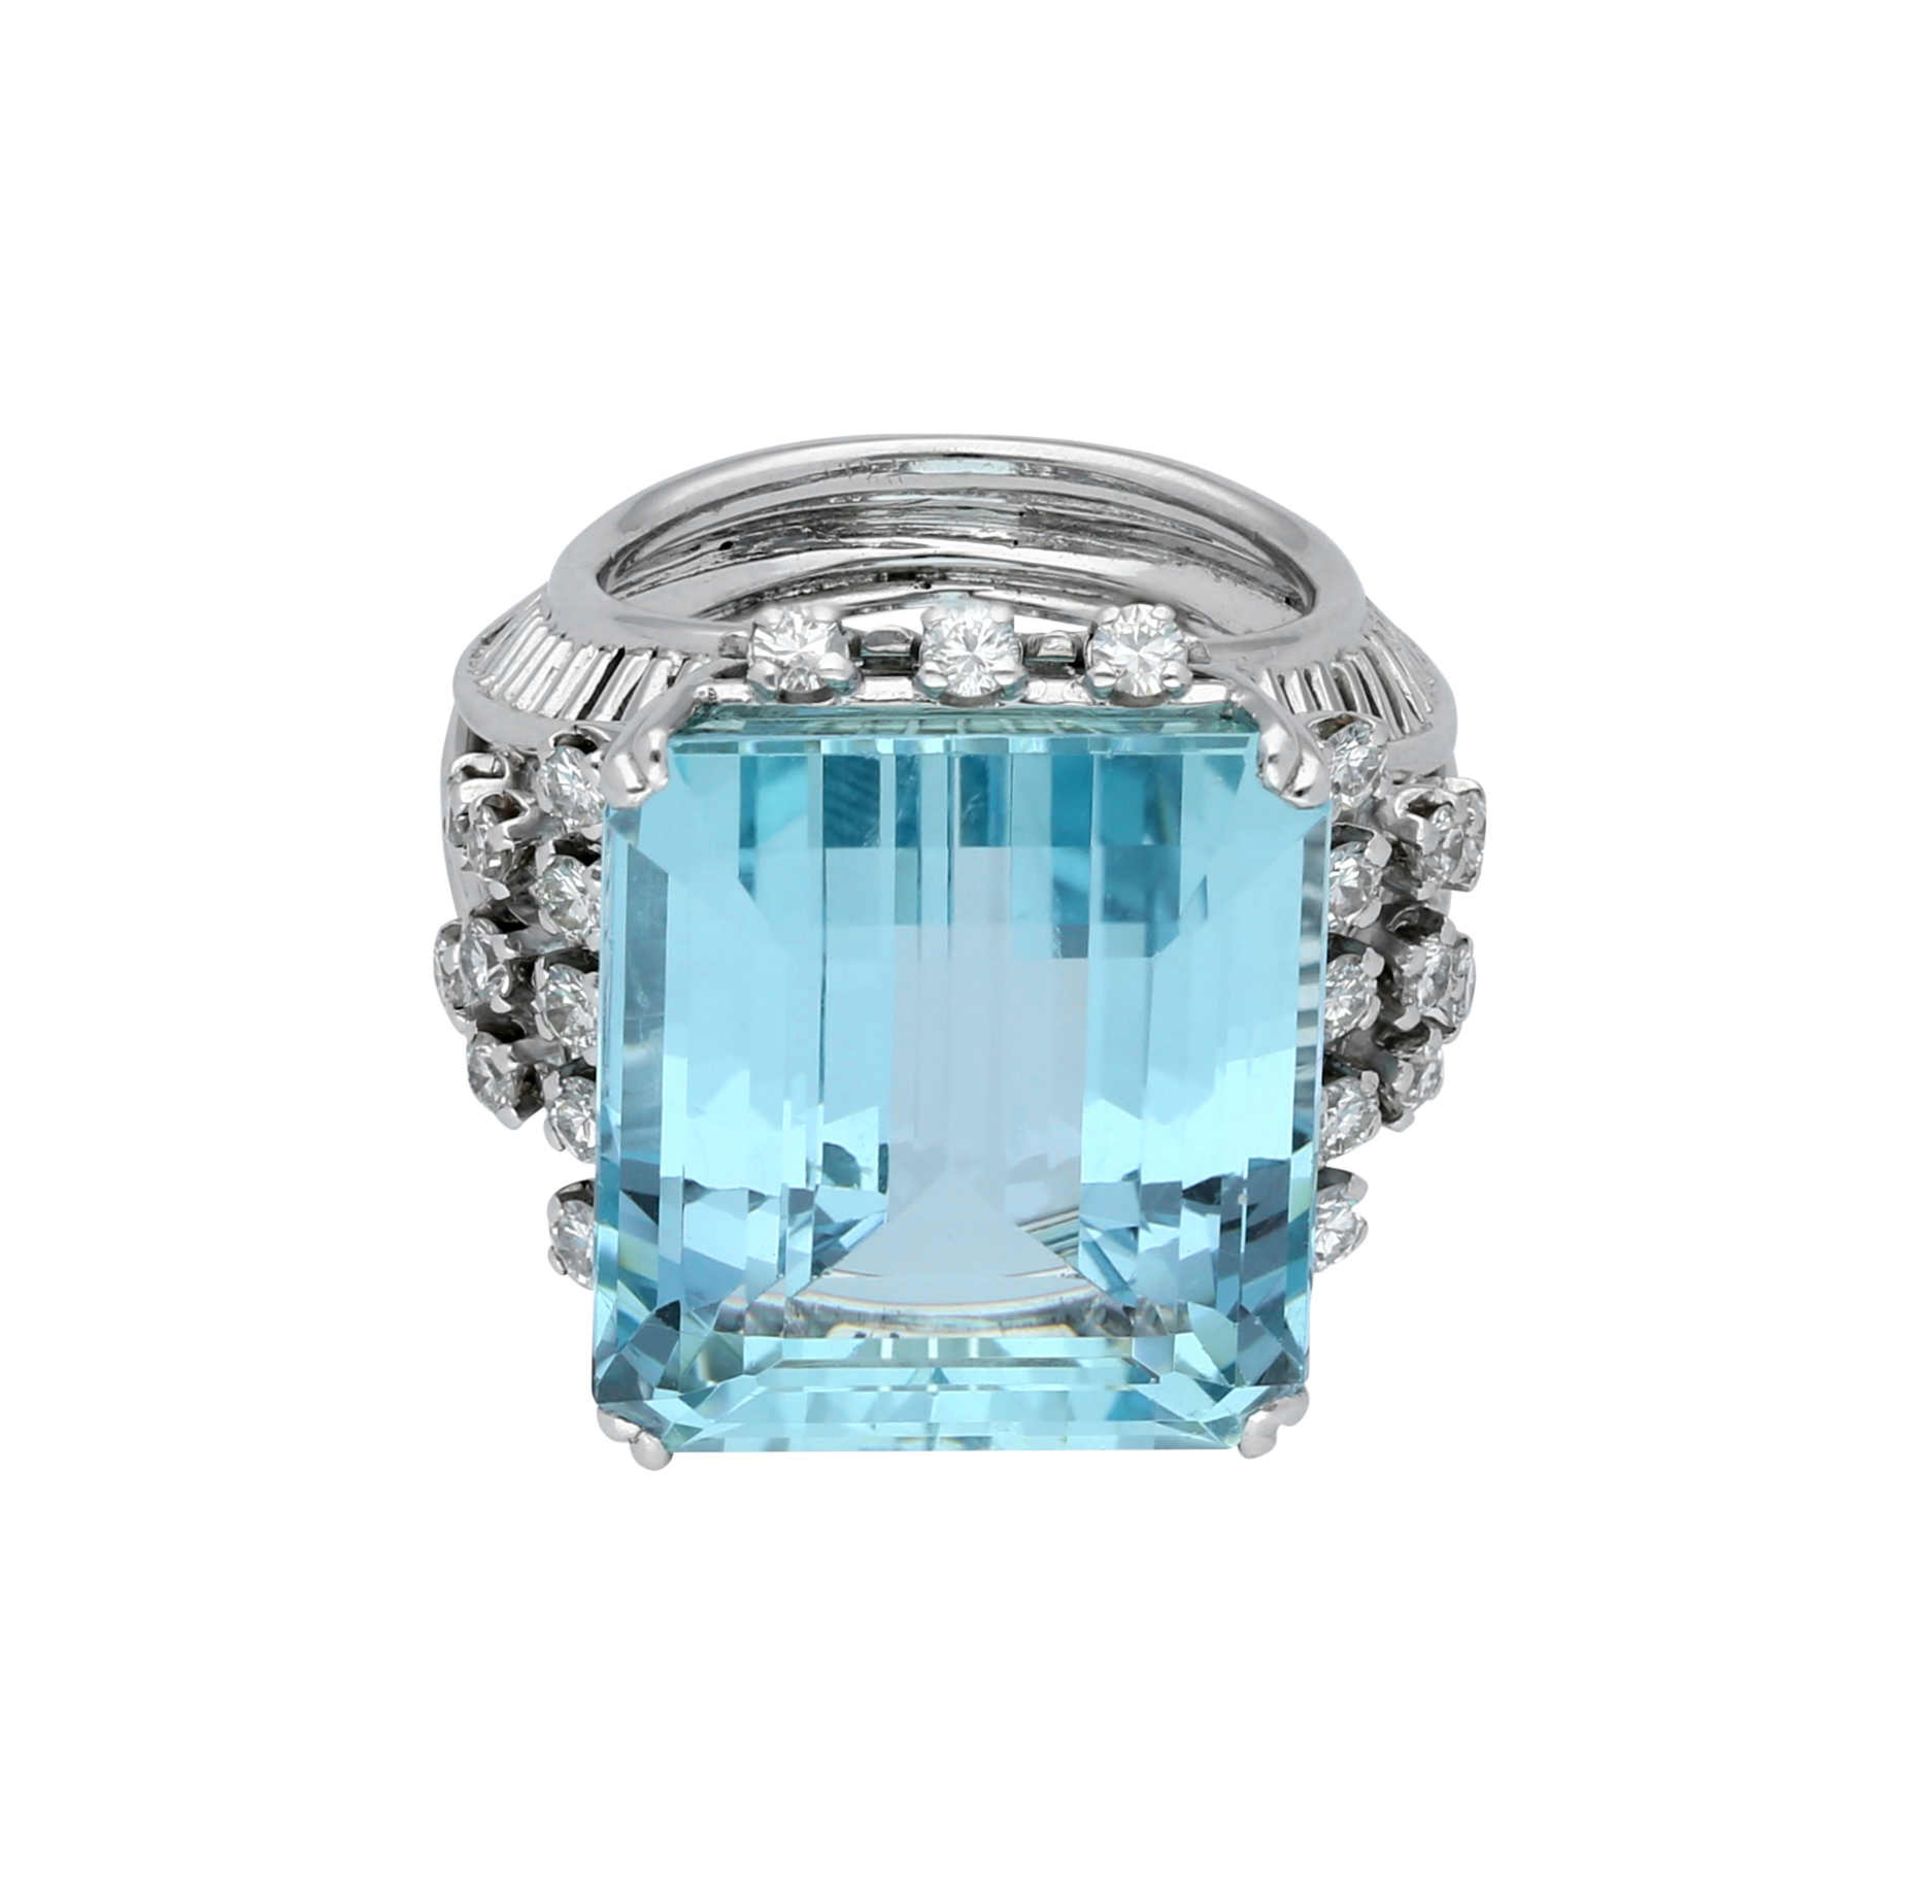 Aquamarin-Brillant-Ring, imposantes Design, in Weissgold 18K, als Blickfangein grosser,